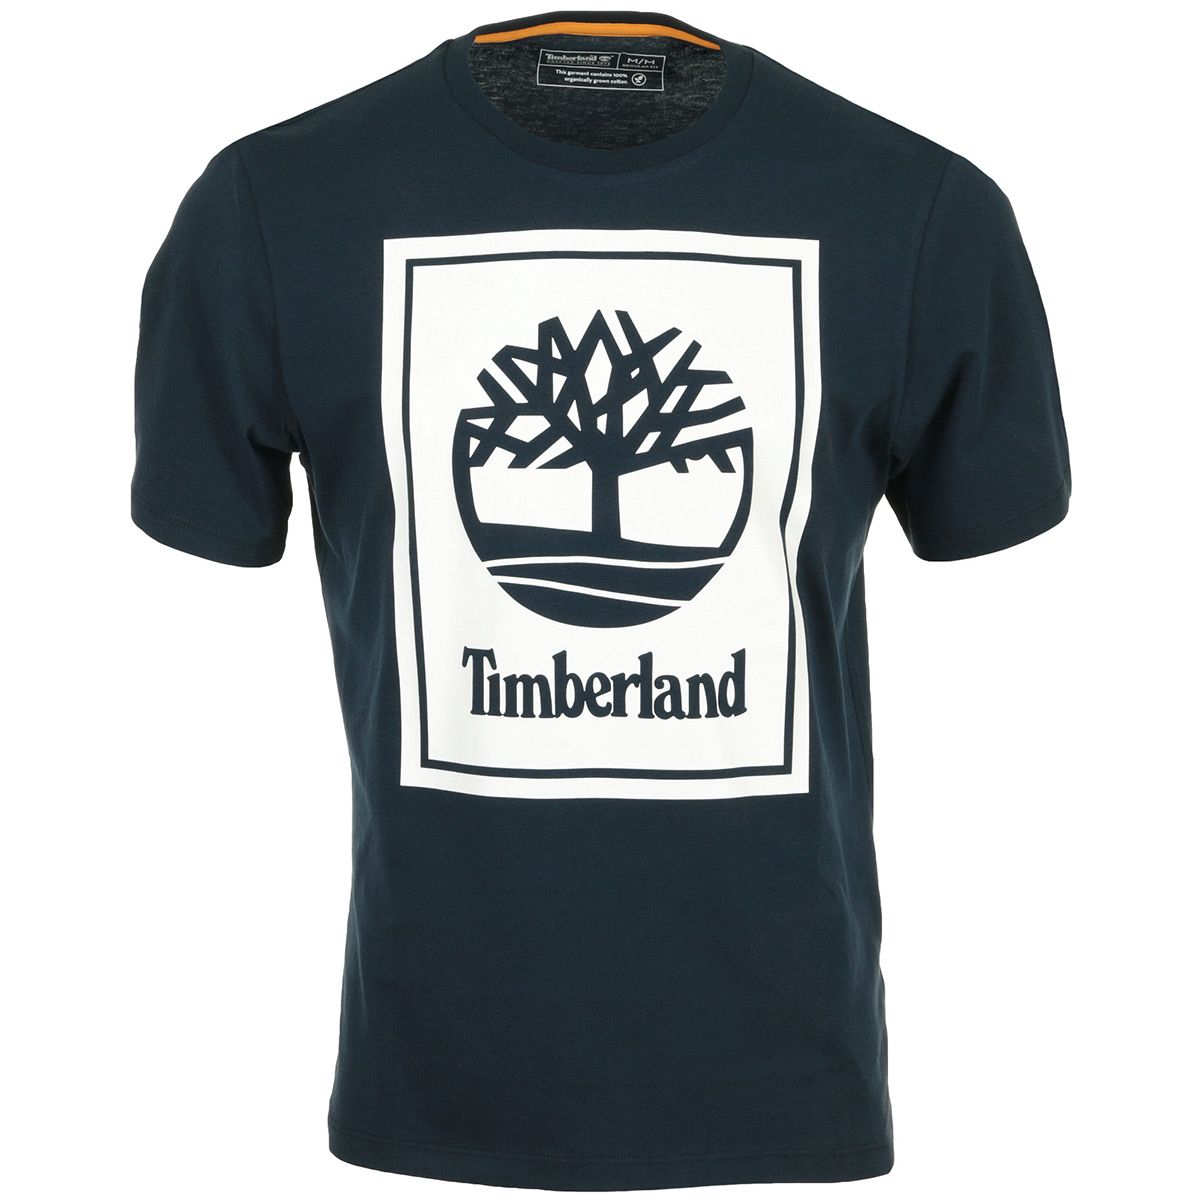 Timberland Stack Logo Tee